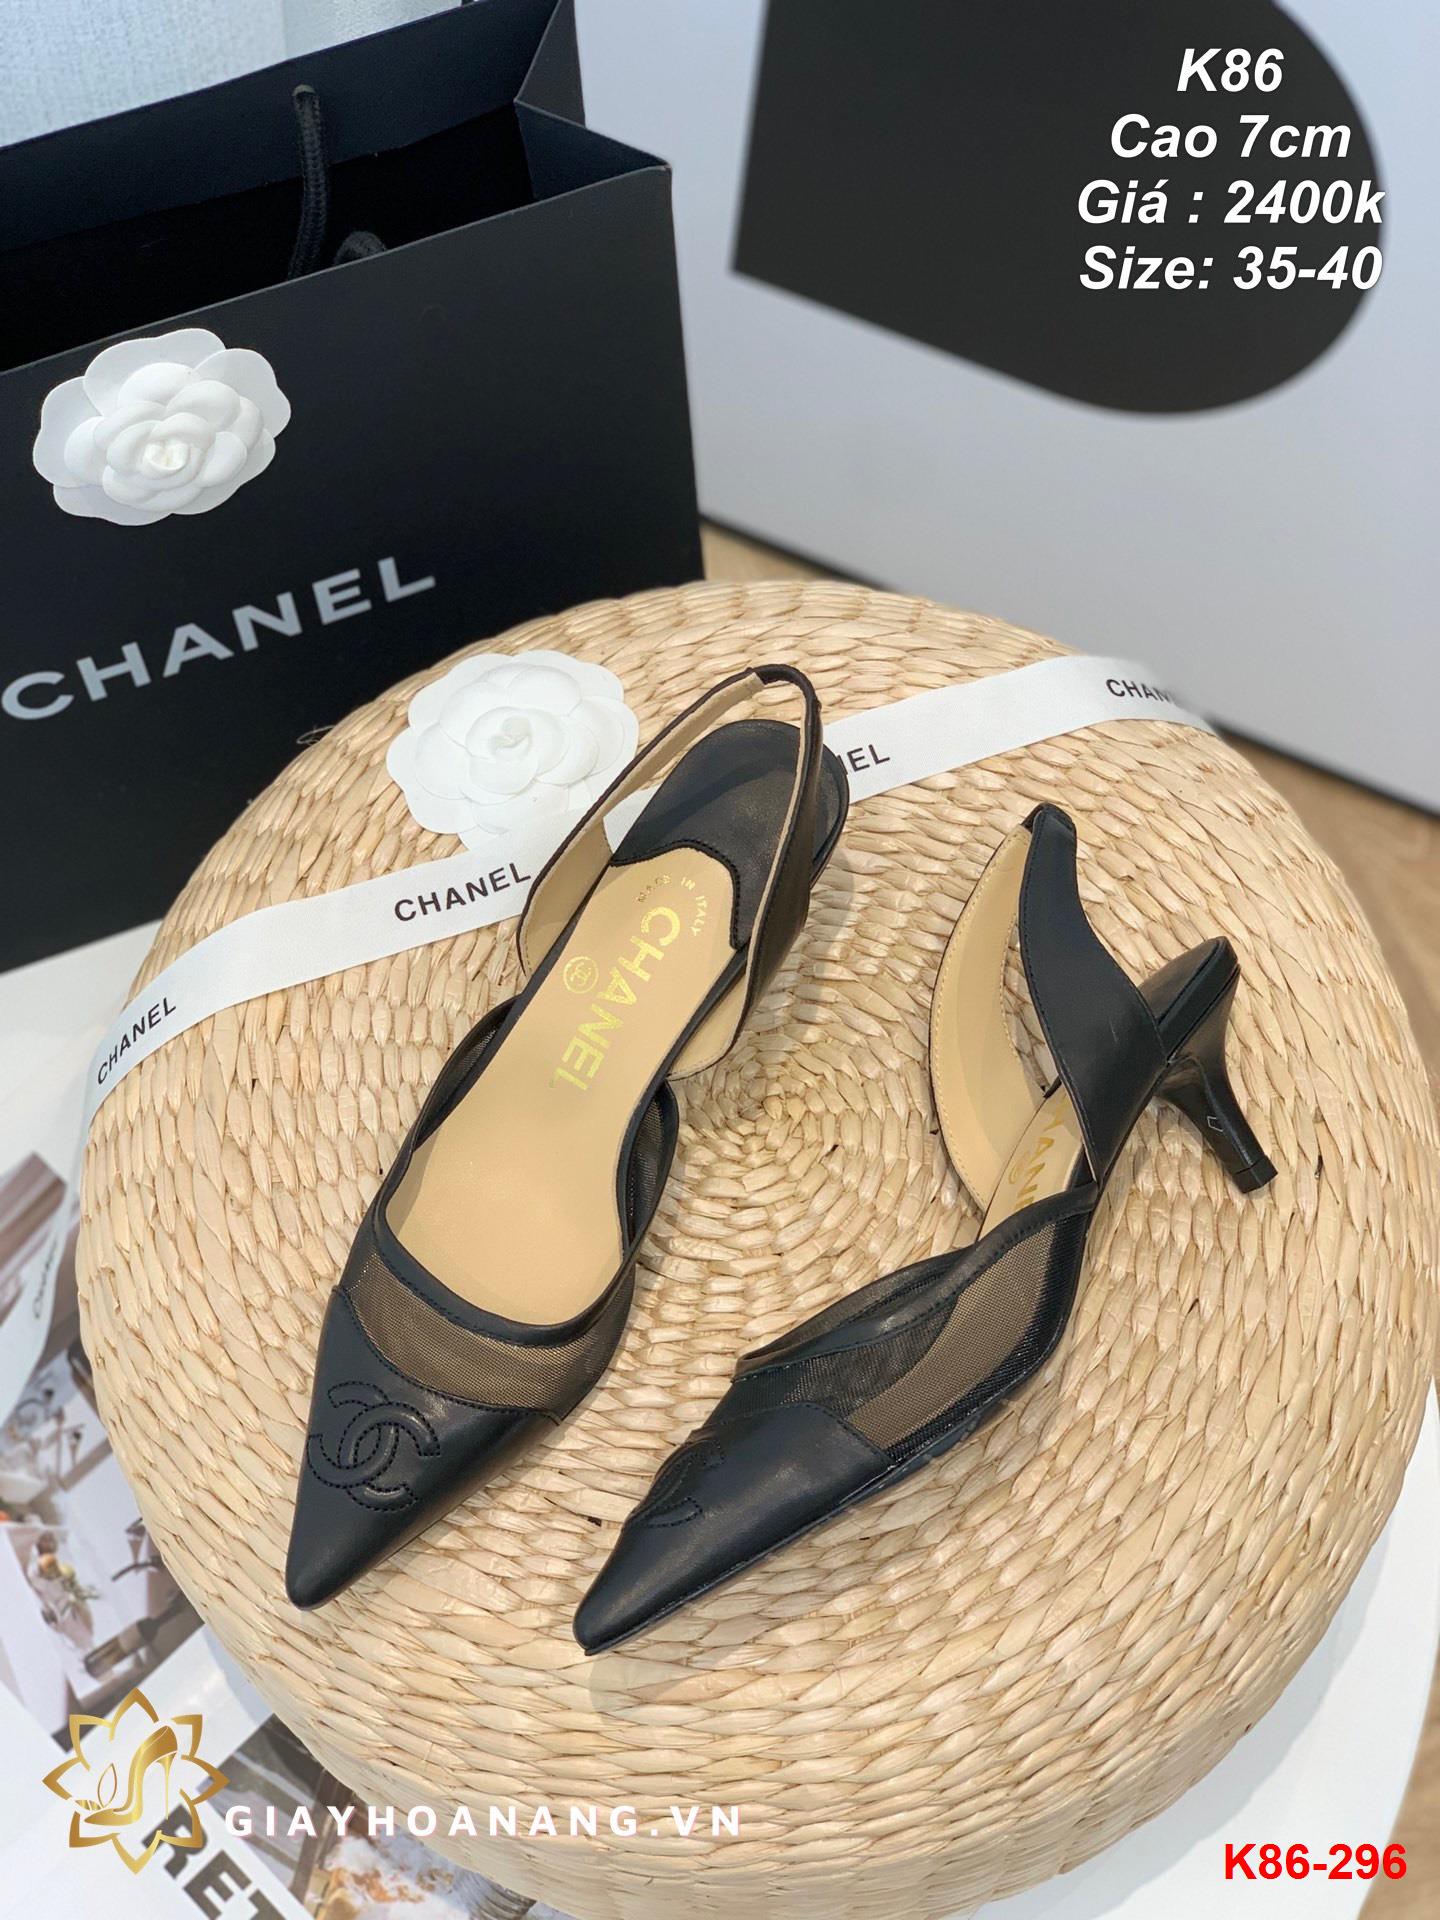 K86-296 Chanel sandal cao 7cm siêu cấp